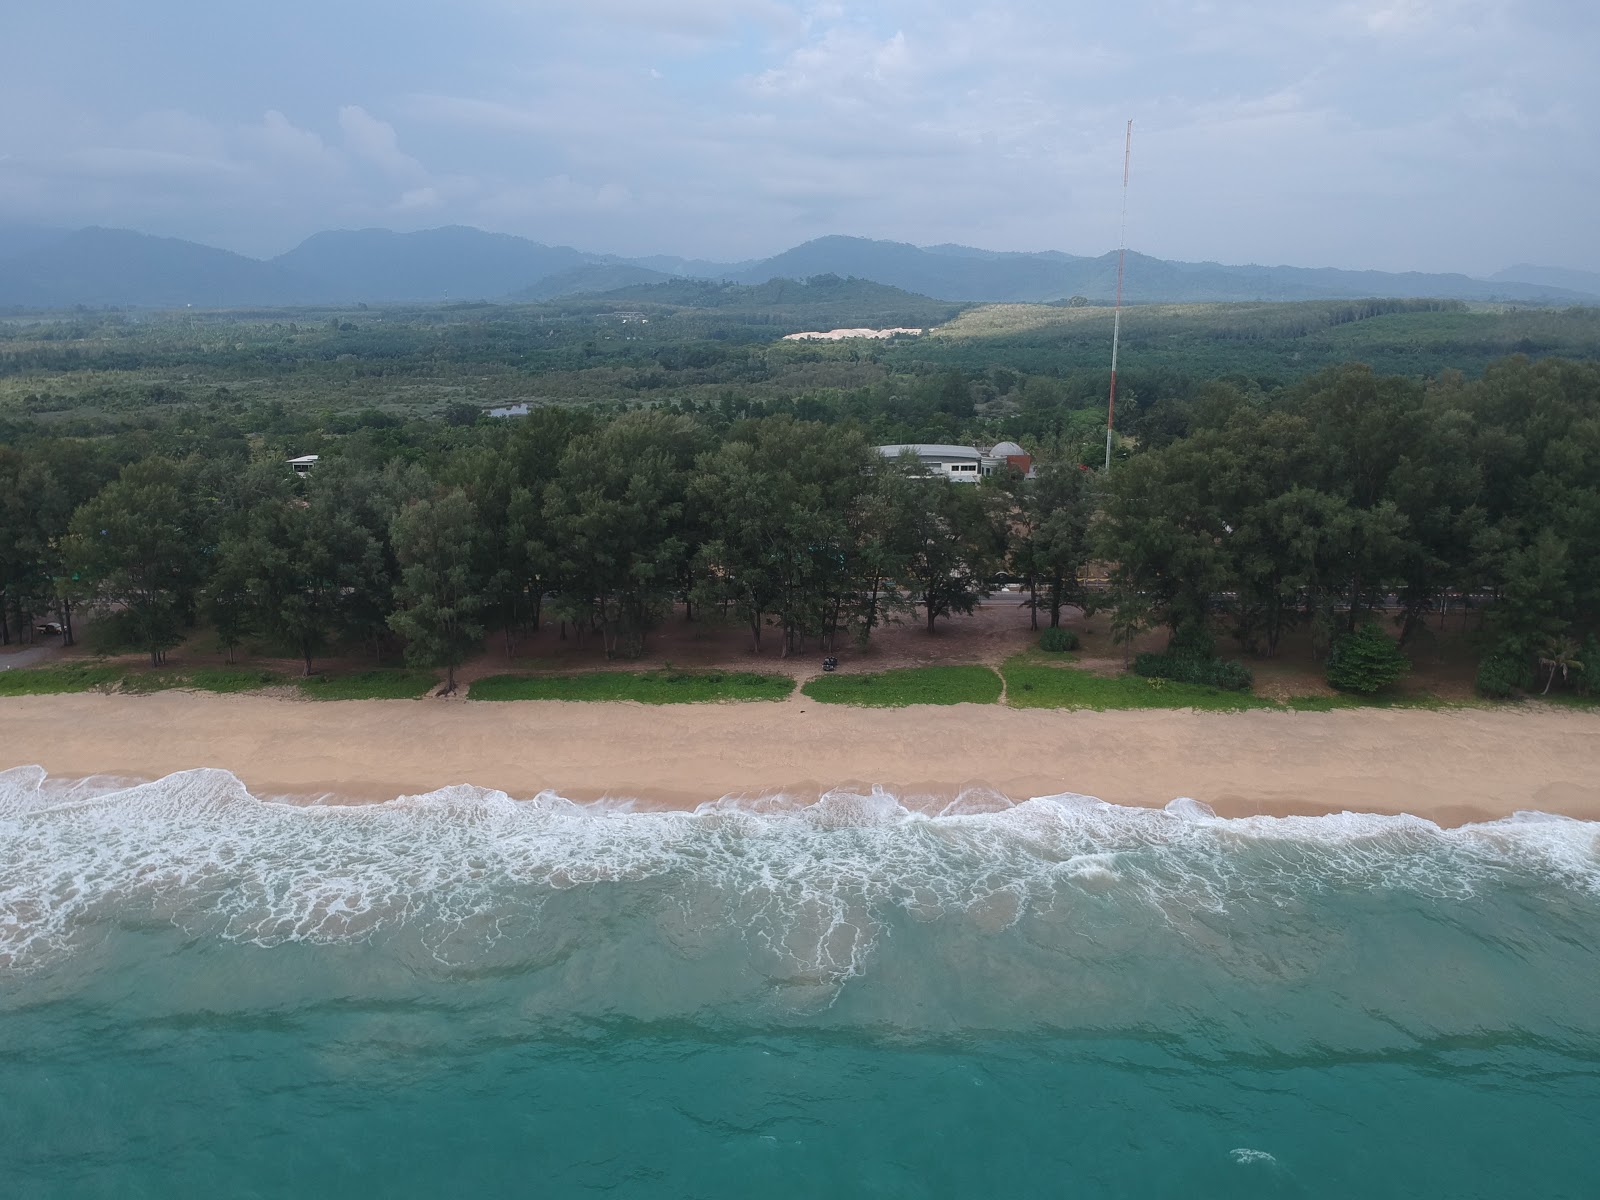 Foto di Thaimuang Beach e l'insediamento